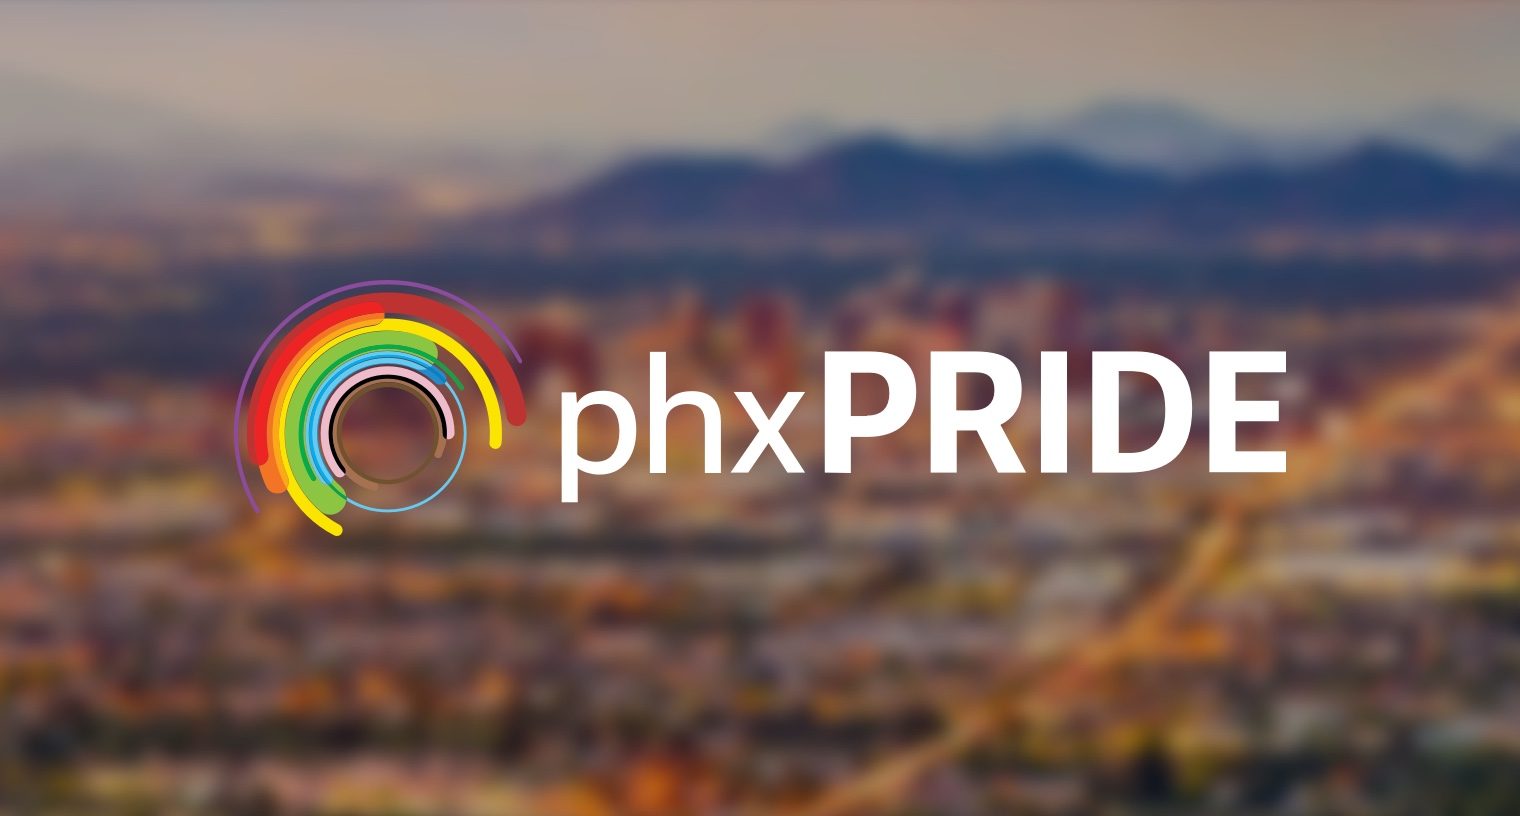 Phoenix Pride Festival 2021